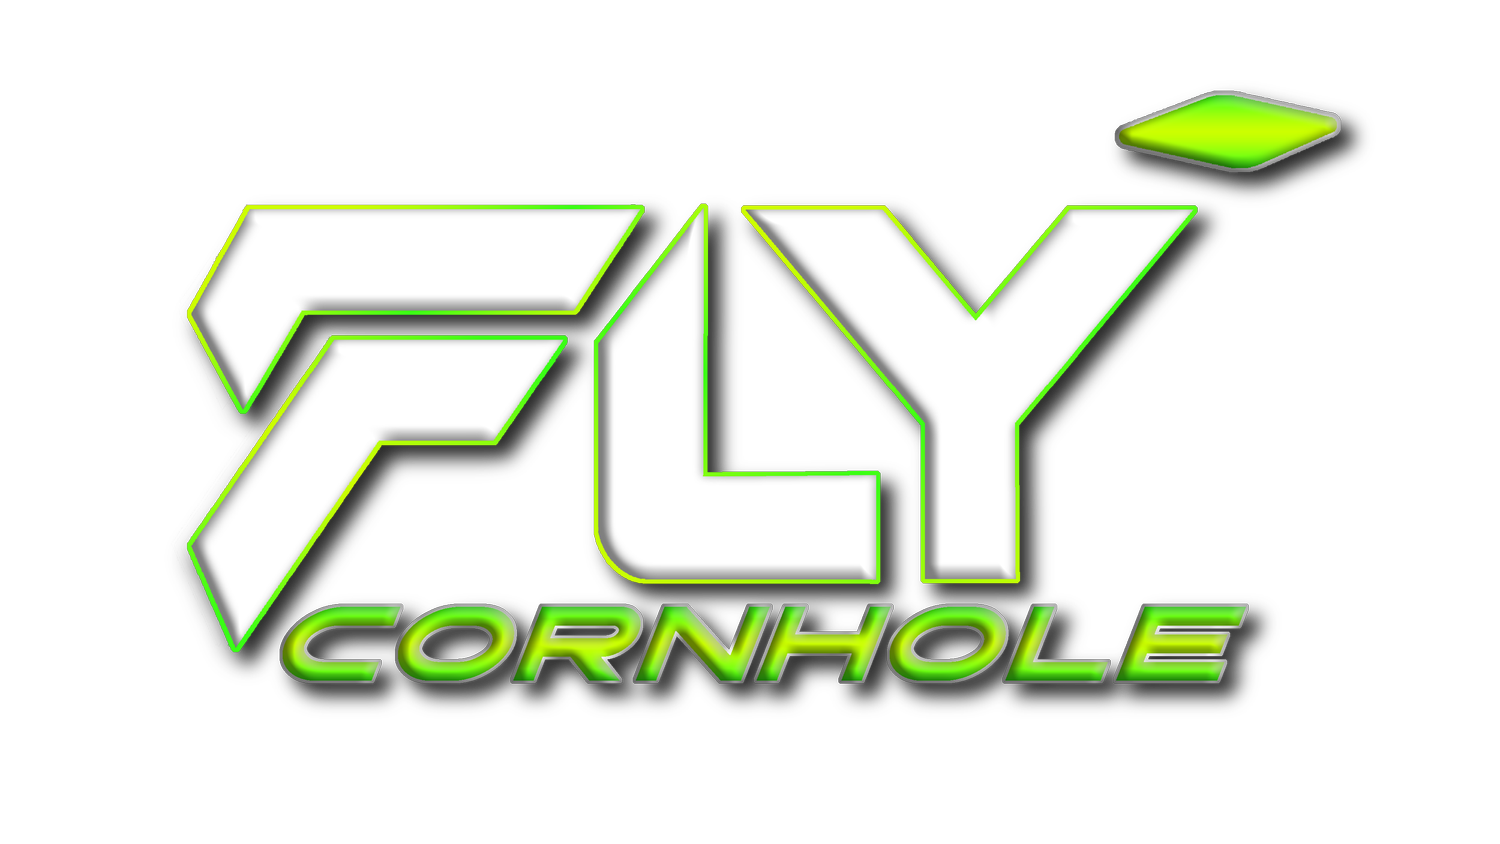 FLY Cornhole